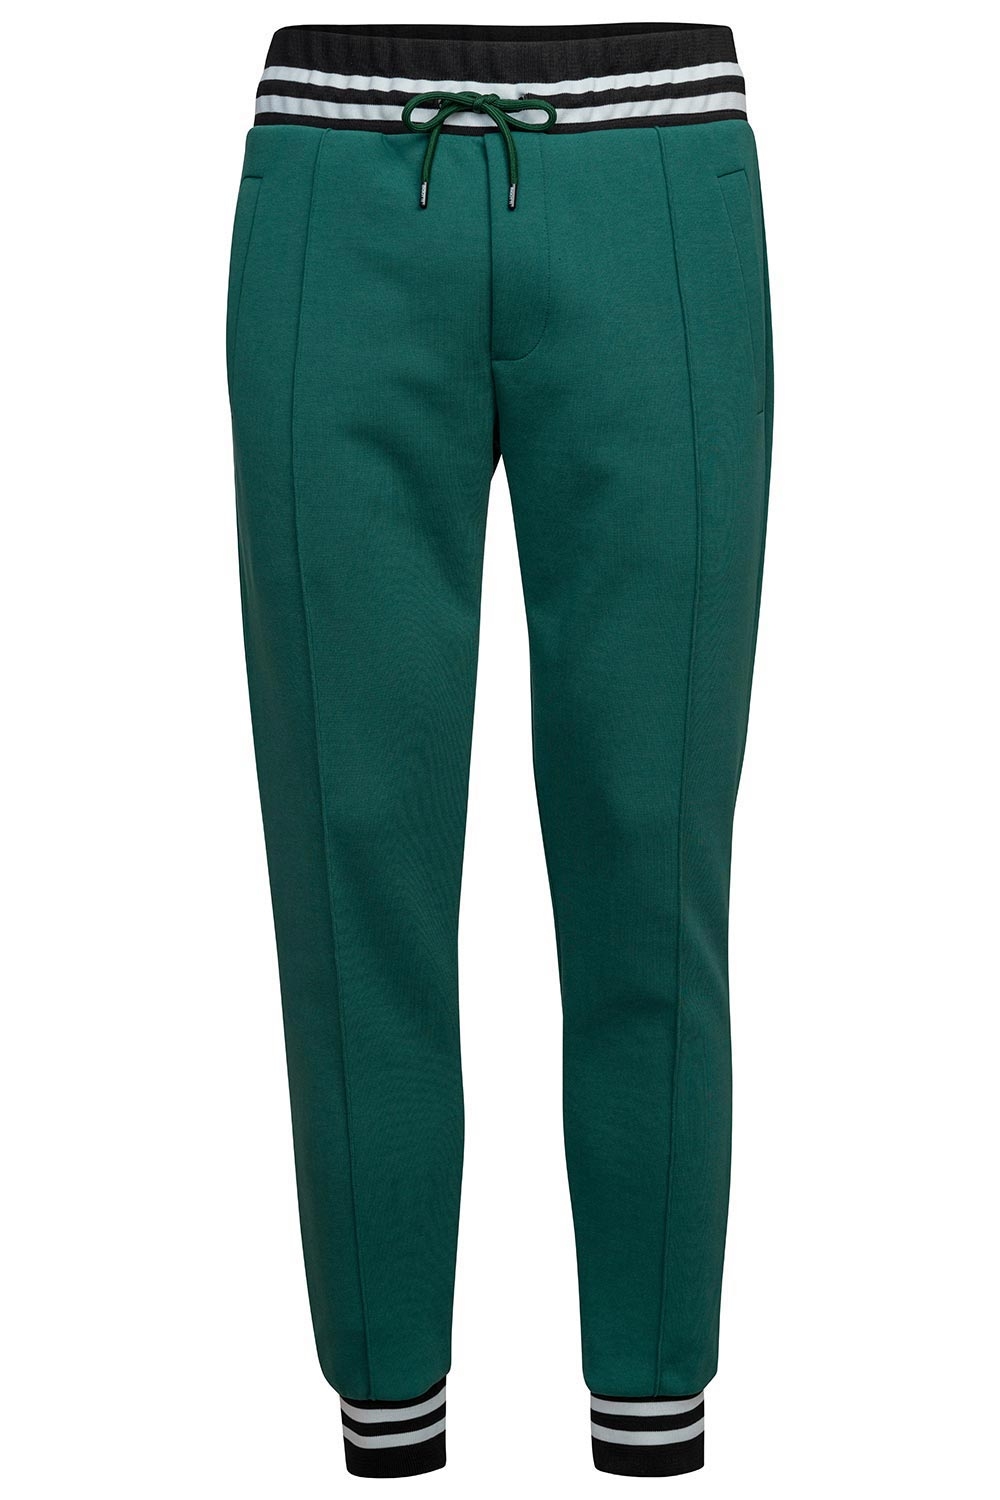 Slim body green plain trousers 1